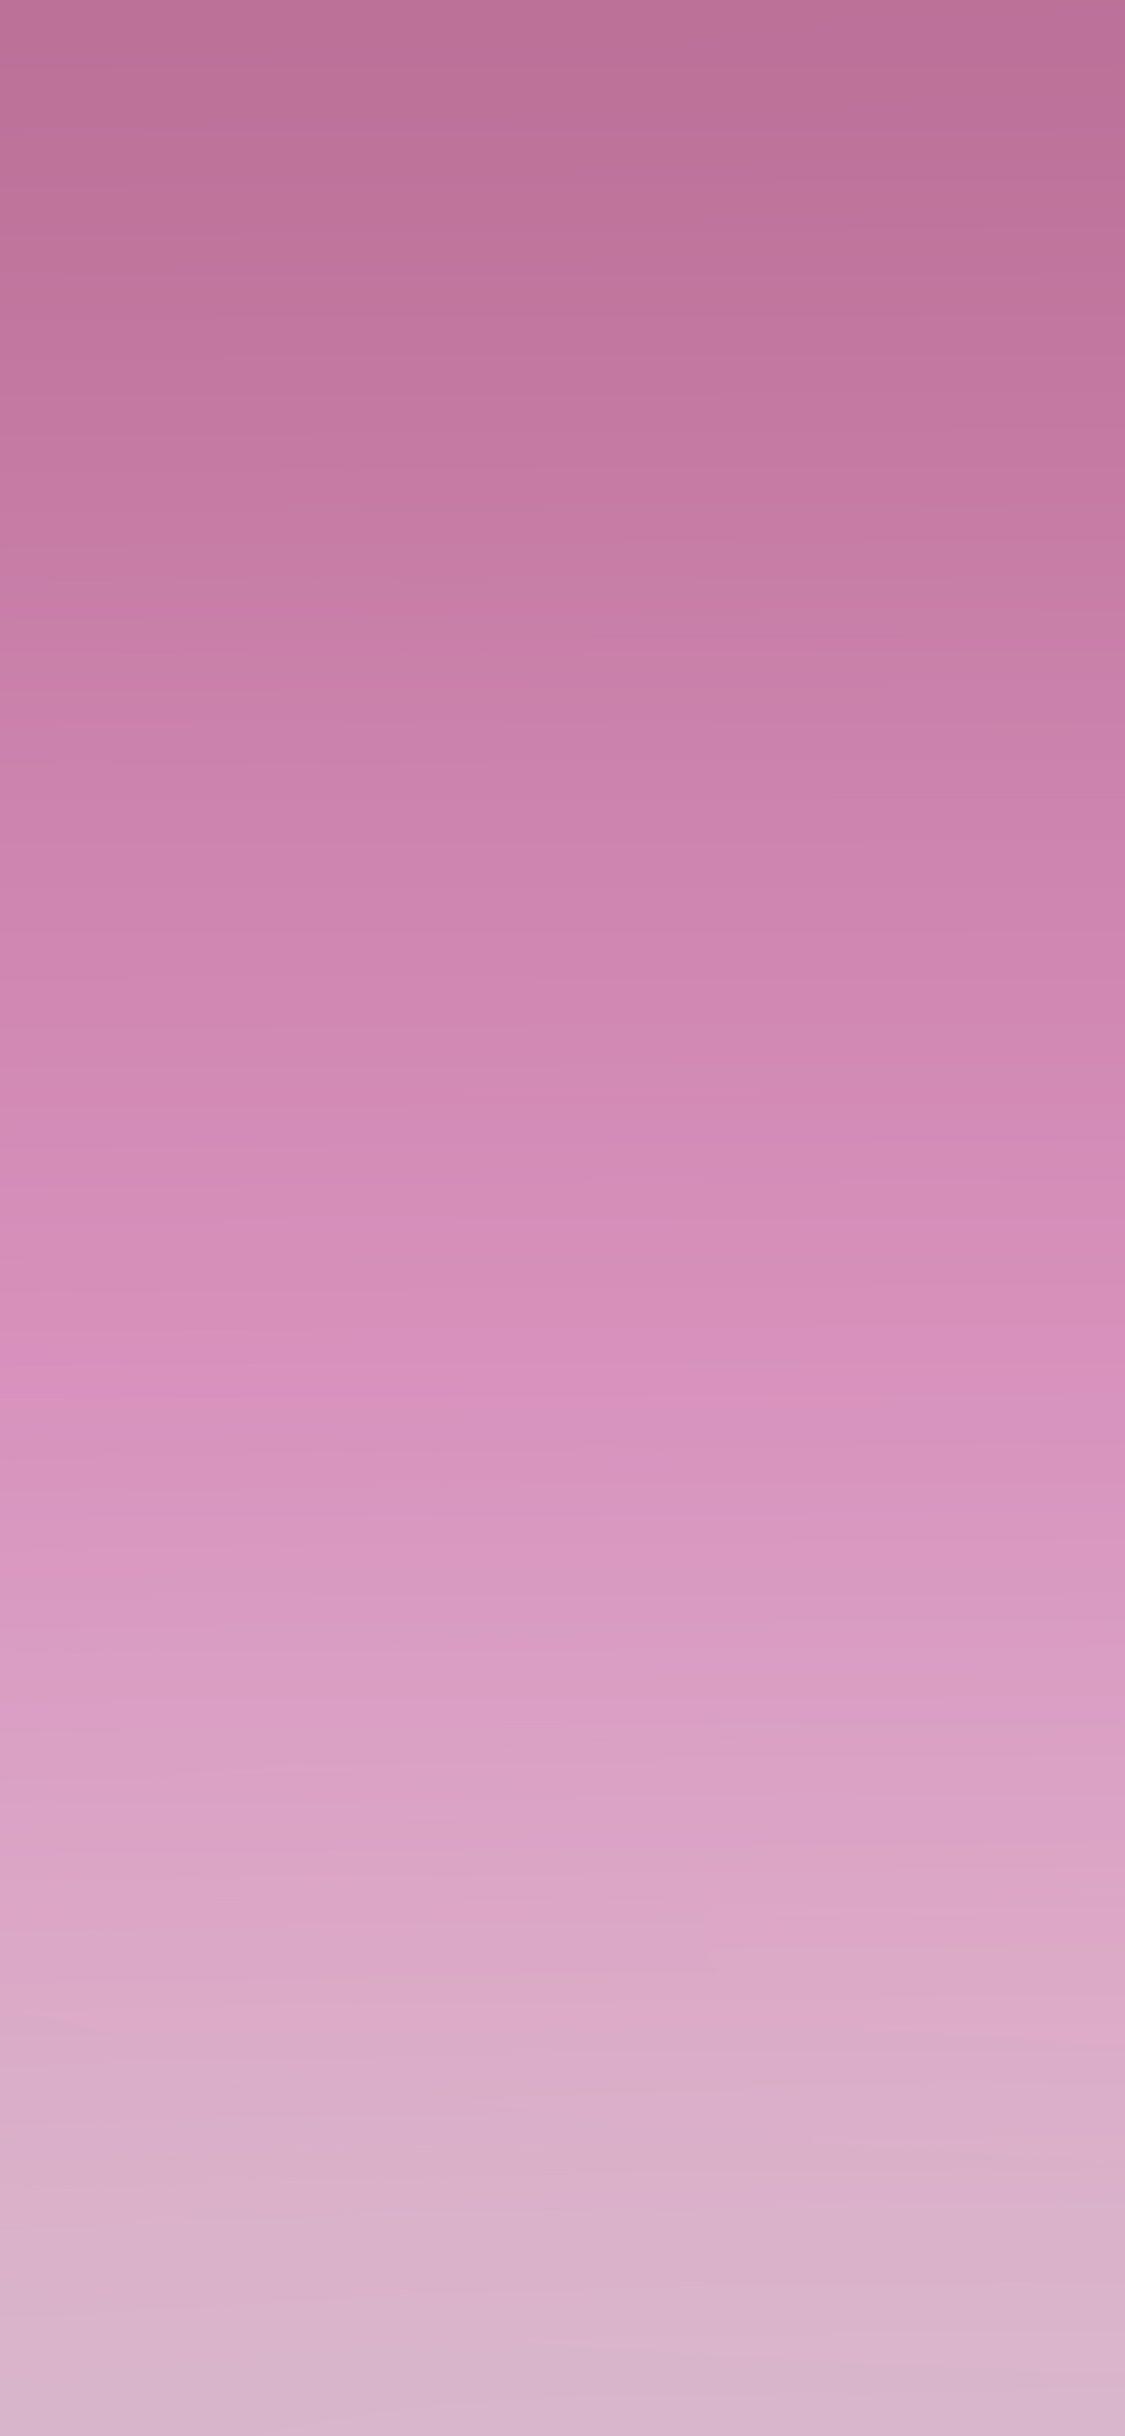 iPhone X wallpaper. red pink soft pastel gradation blur